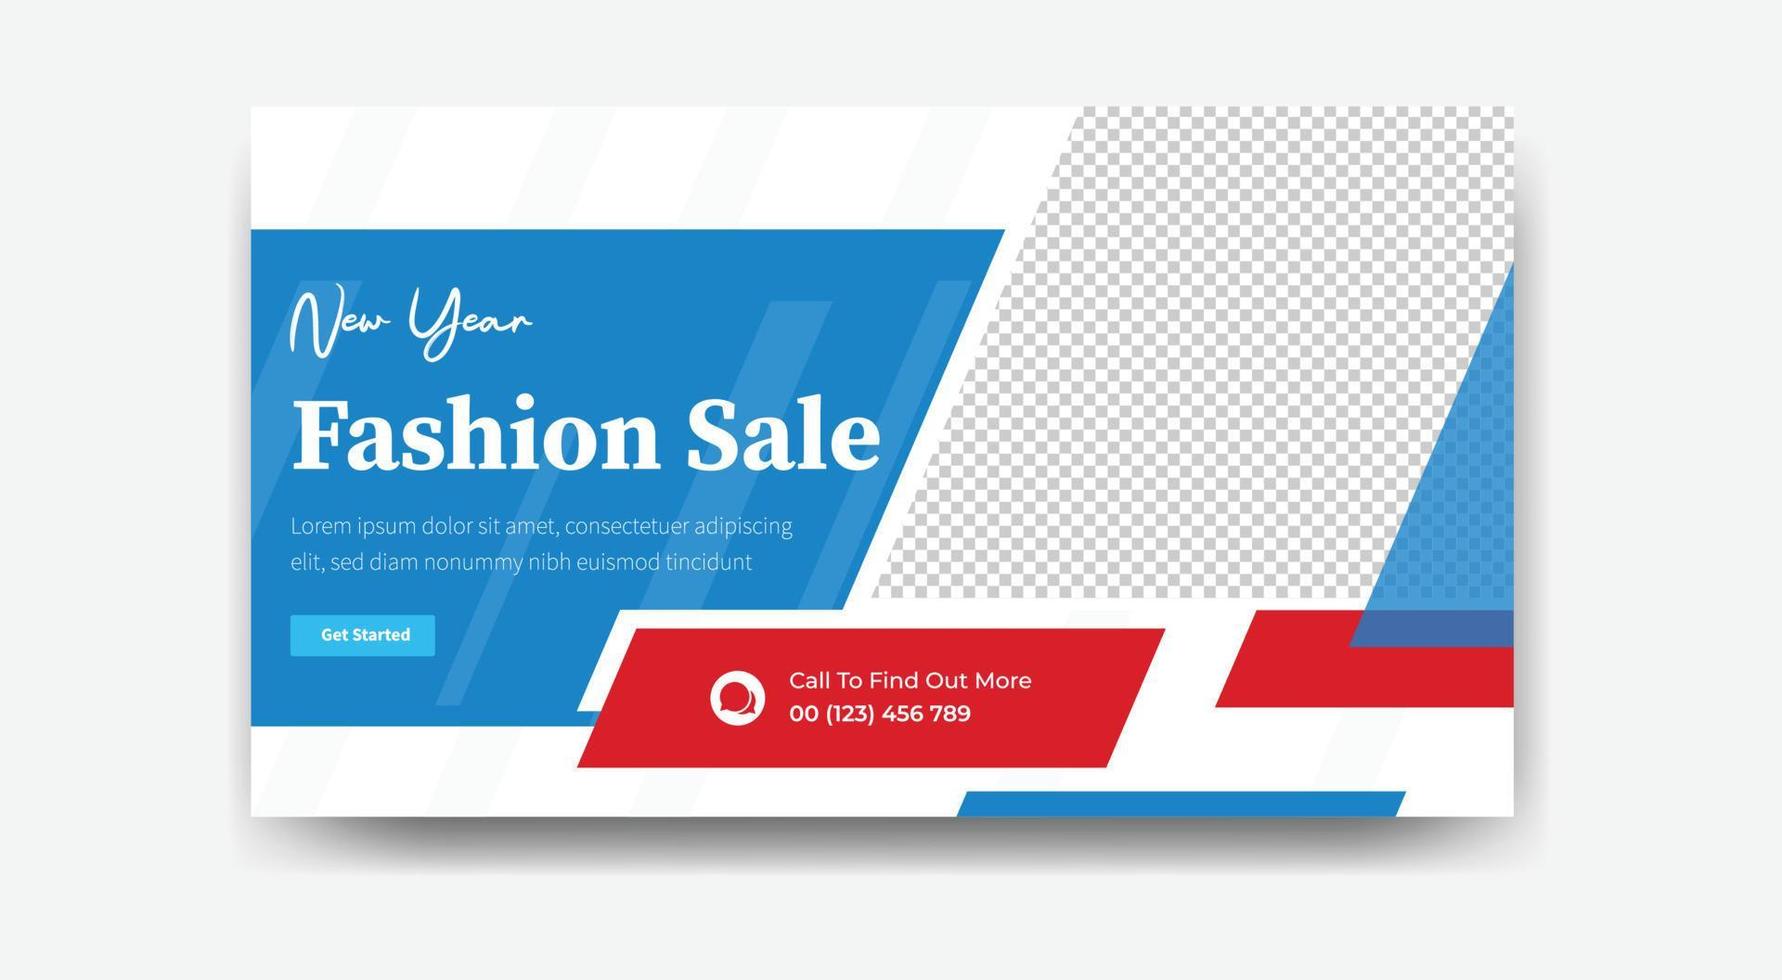 new year fashion sale thumbnail design free vector